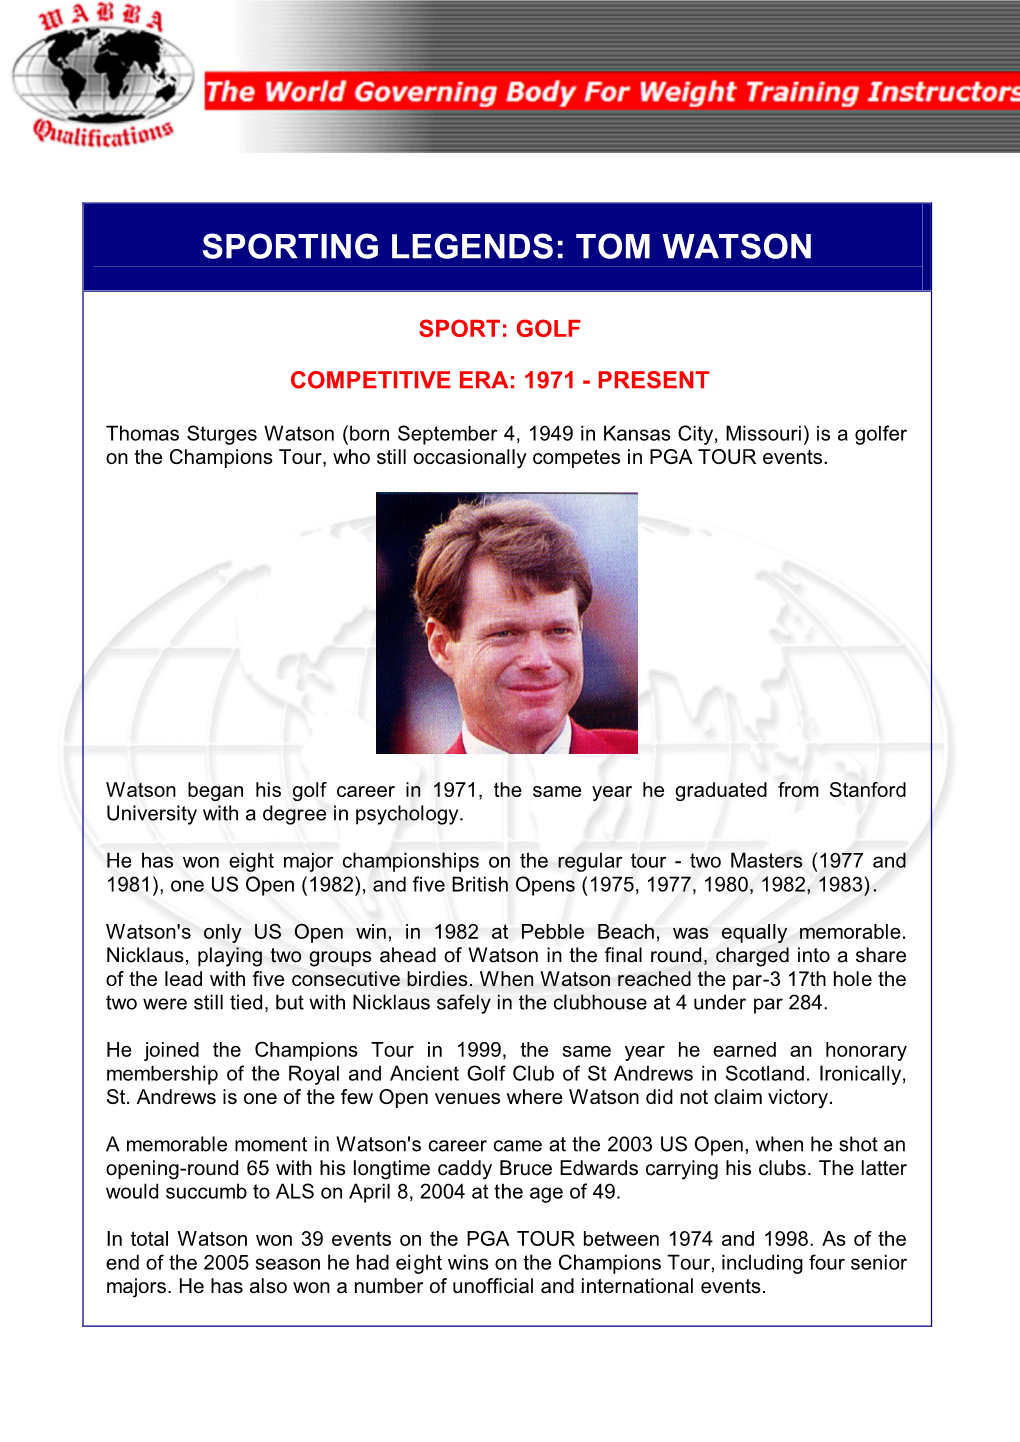 Sporting Legends: Tom Watson